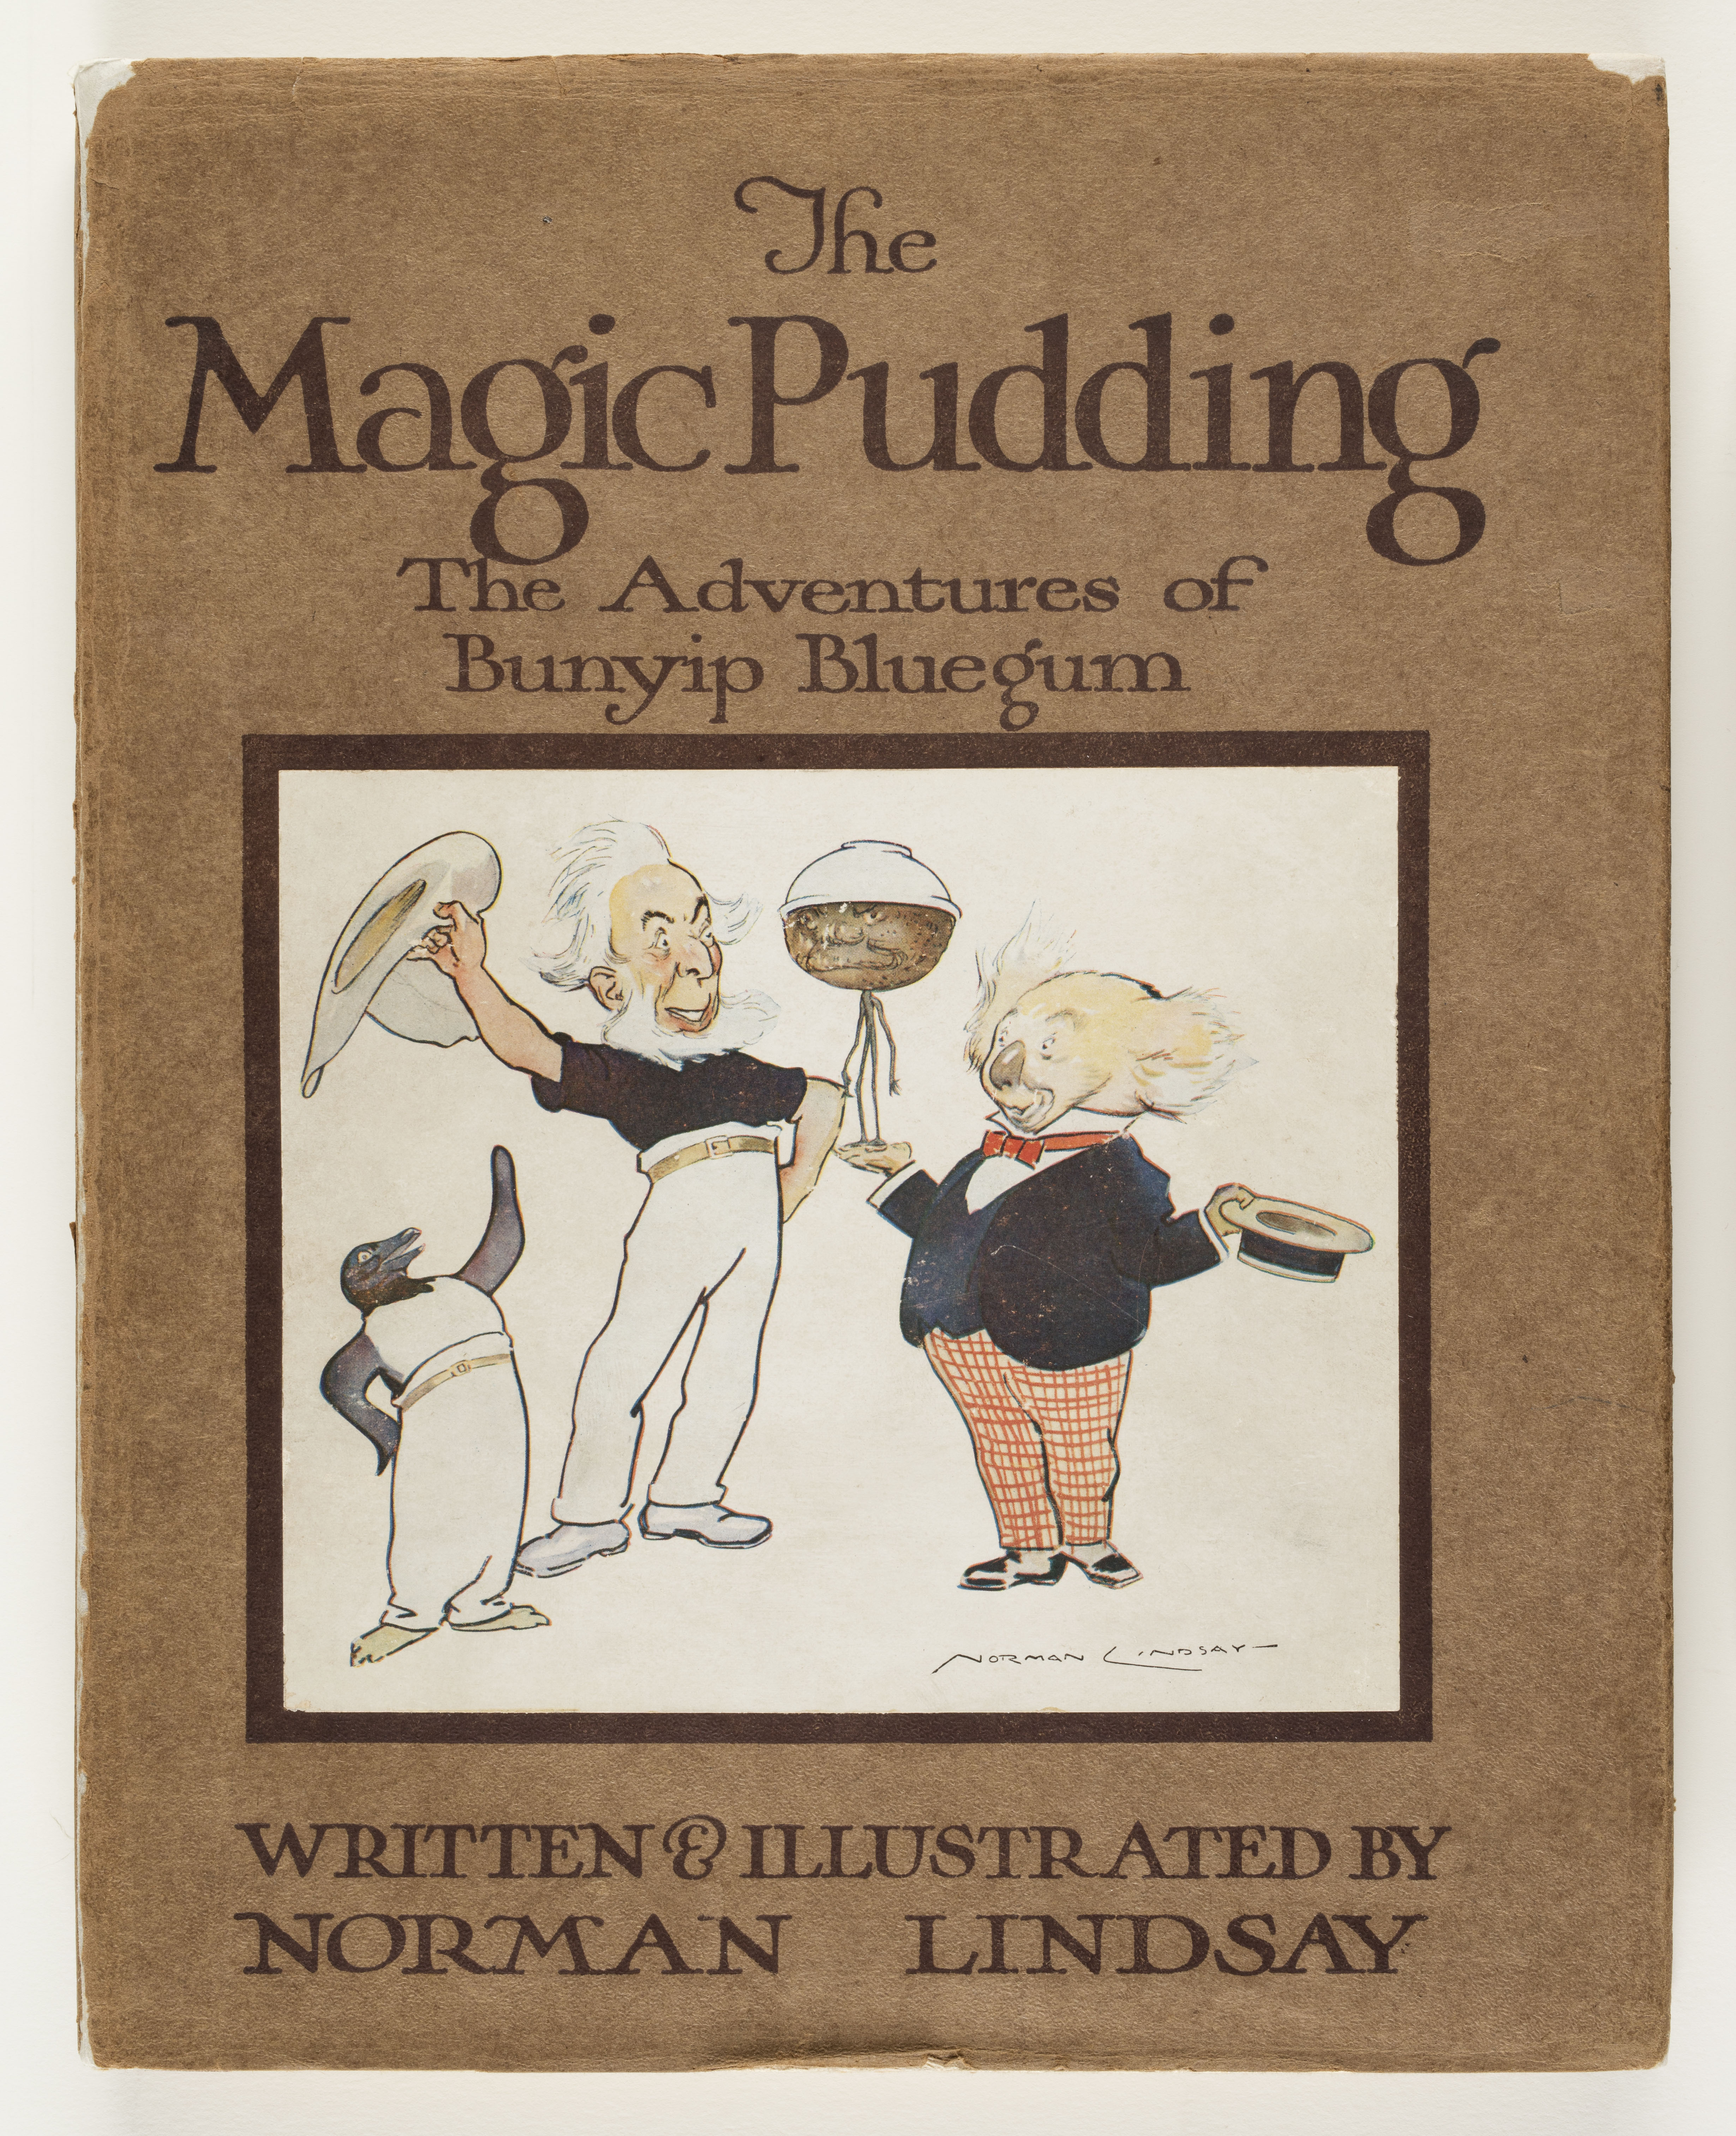 The Magic Pudding book jacket, 1918